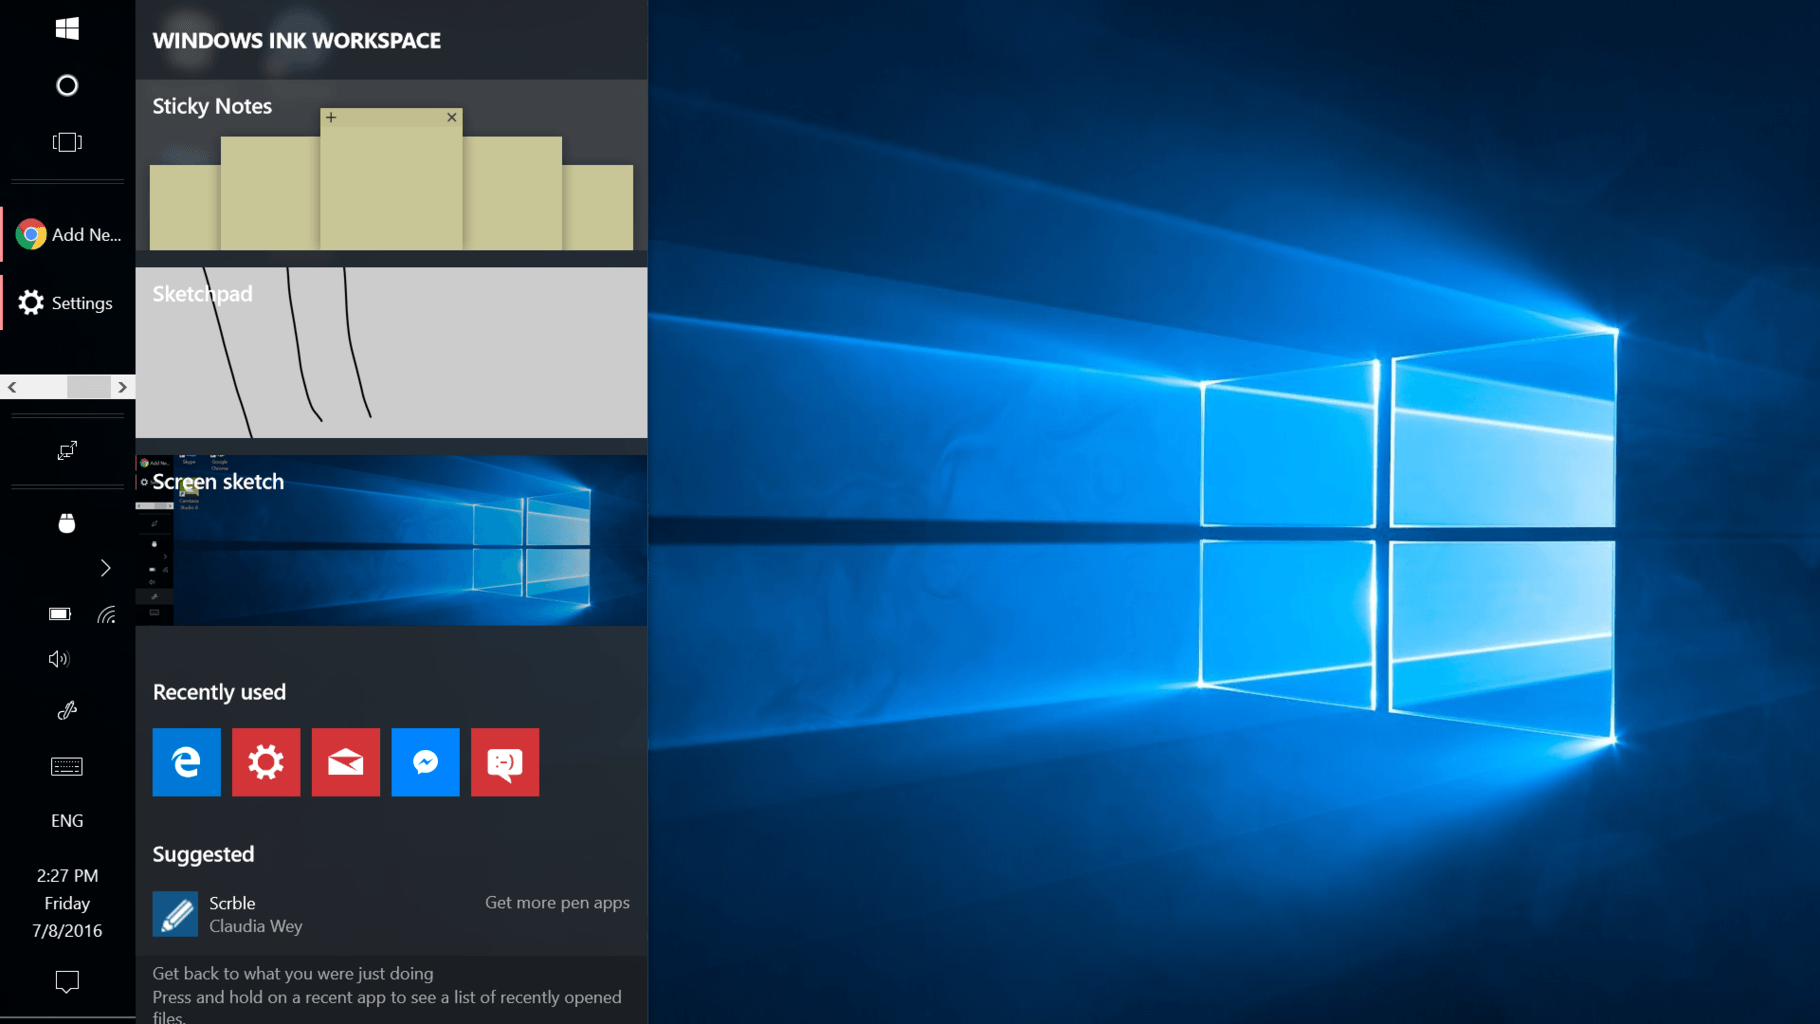 Windows 10 Photos app